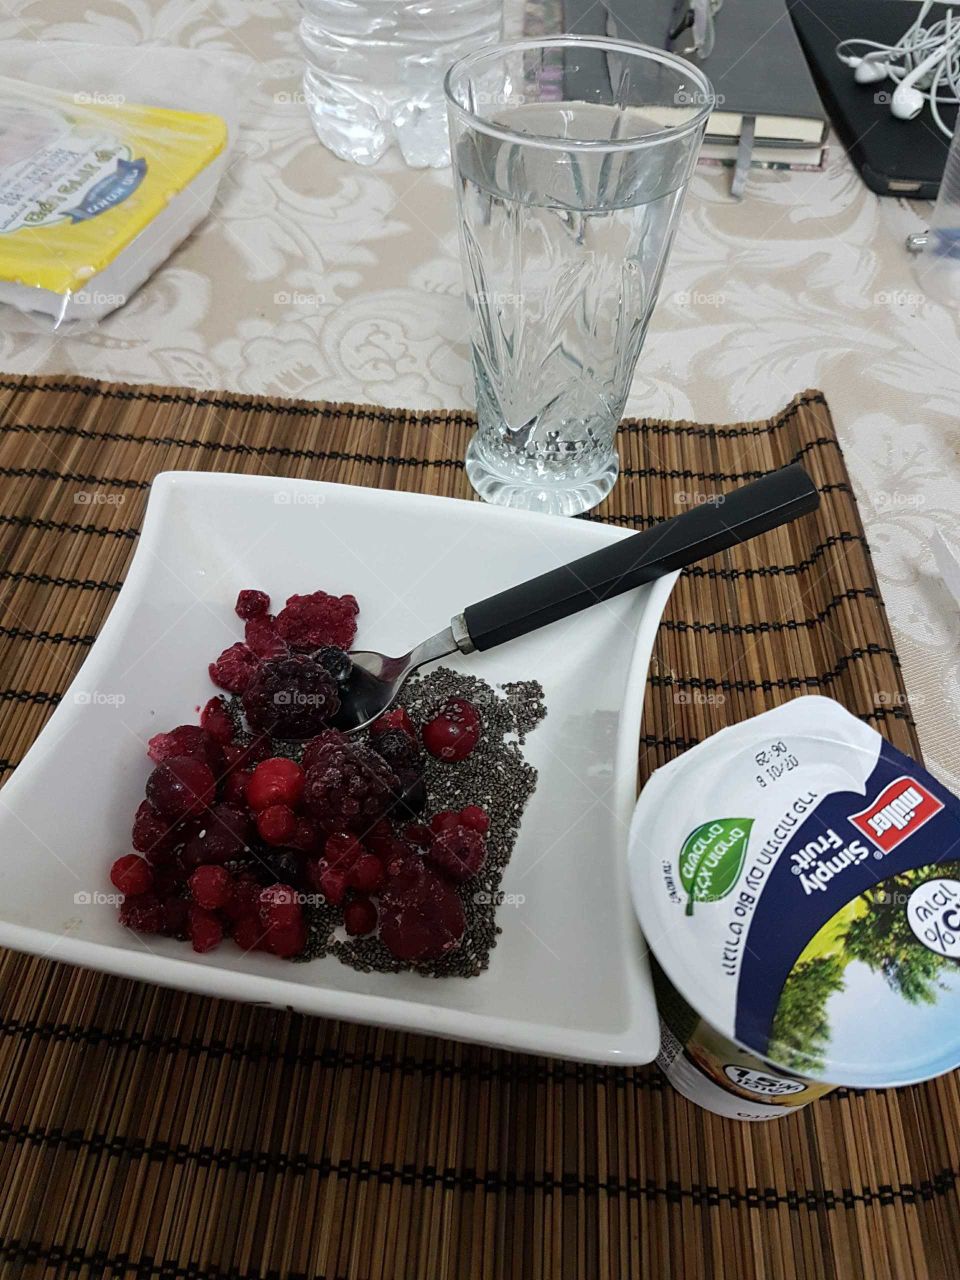 breakfast / yougurt / forest fruit
chia seeds